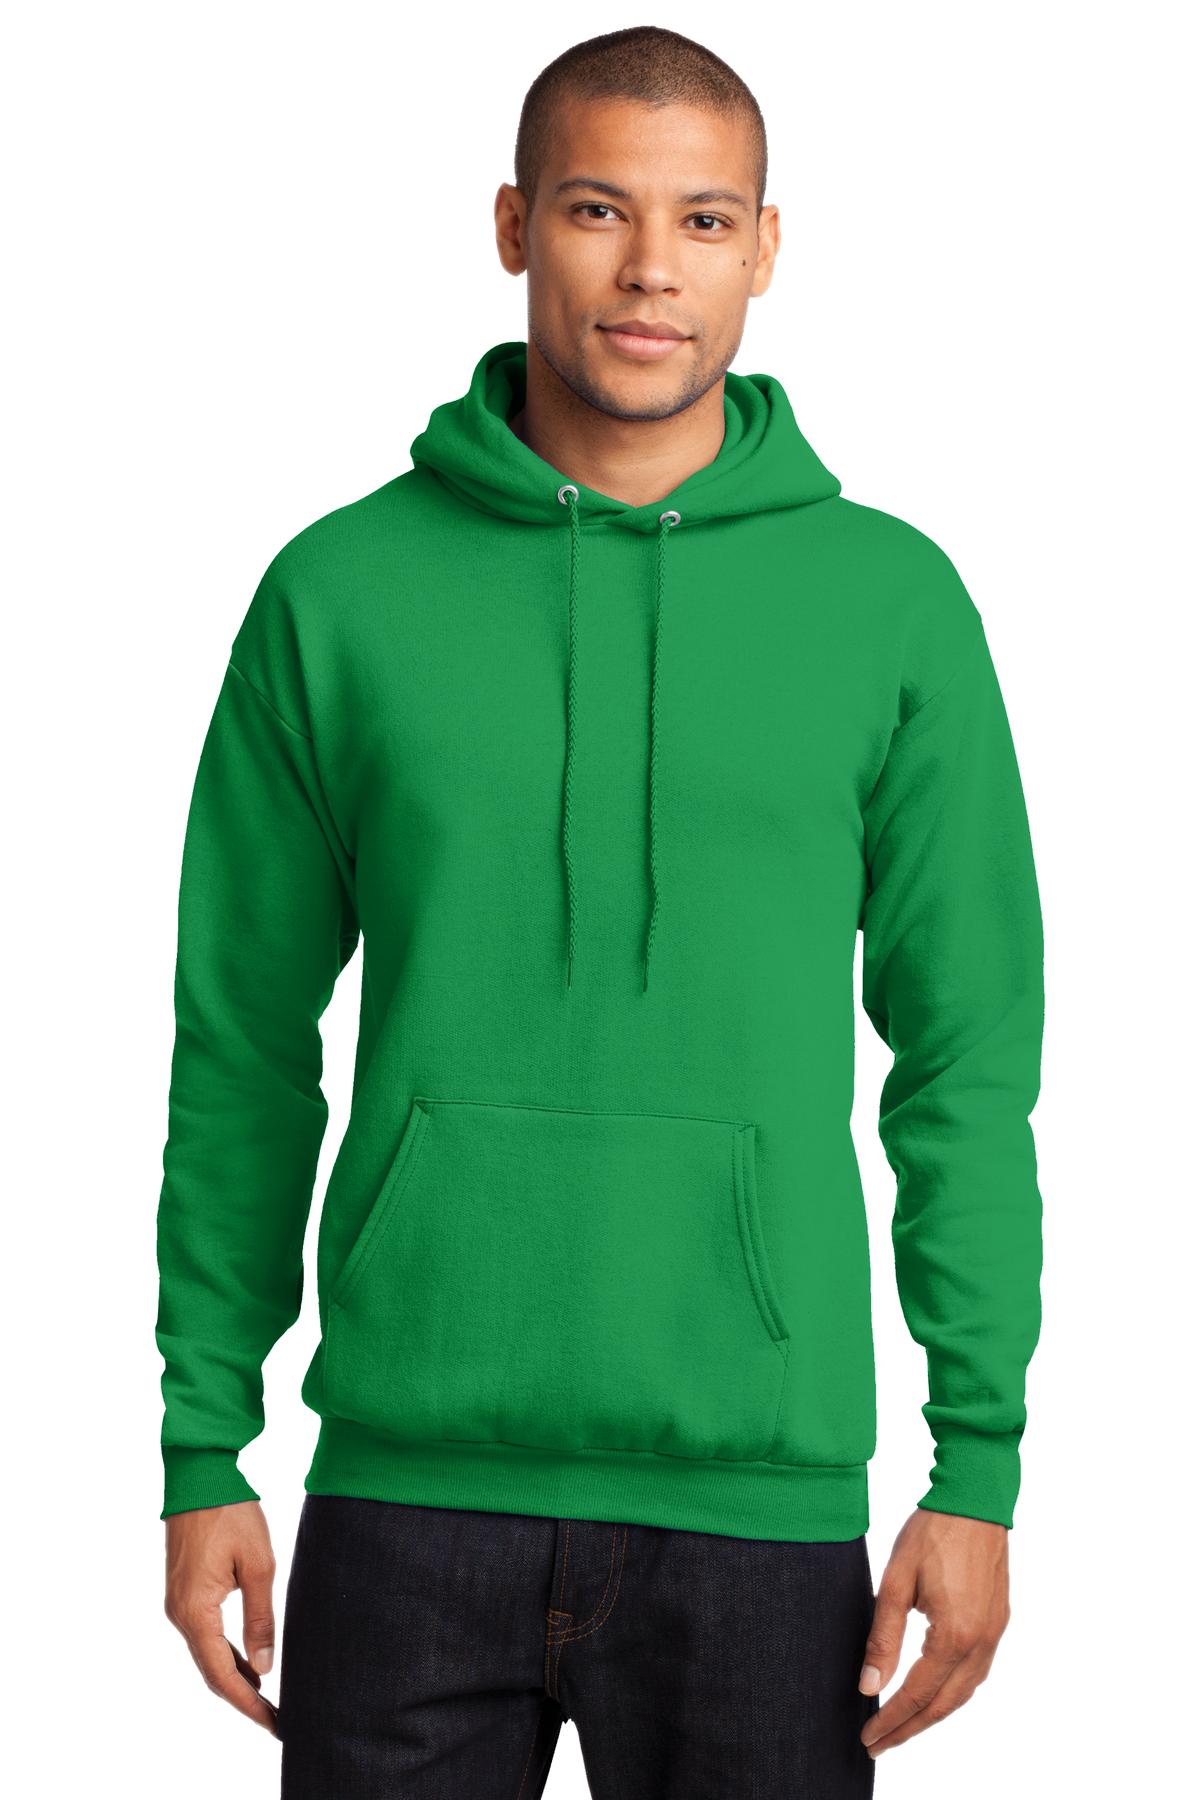 Sweatshirts/Fleece Clover Green Port & Company